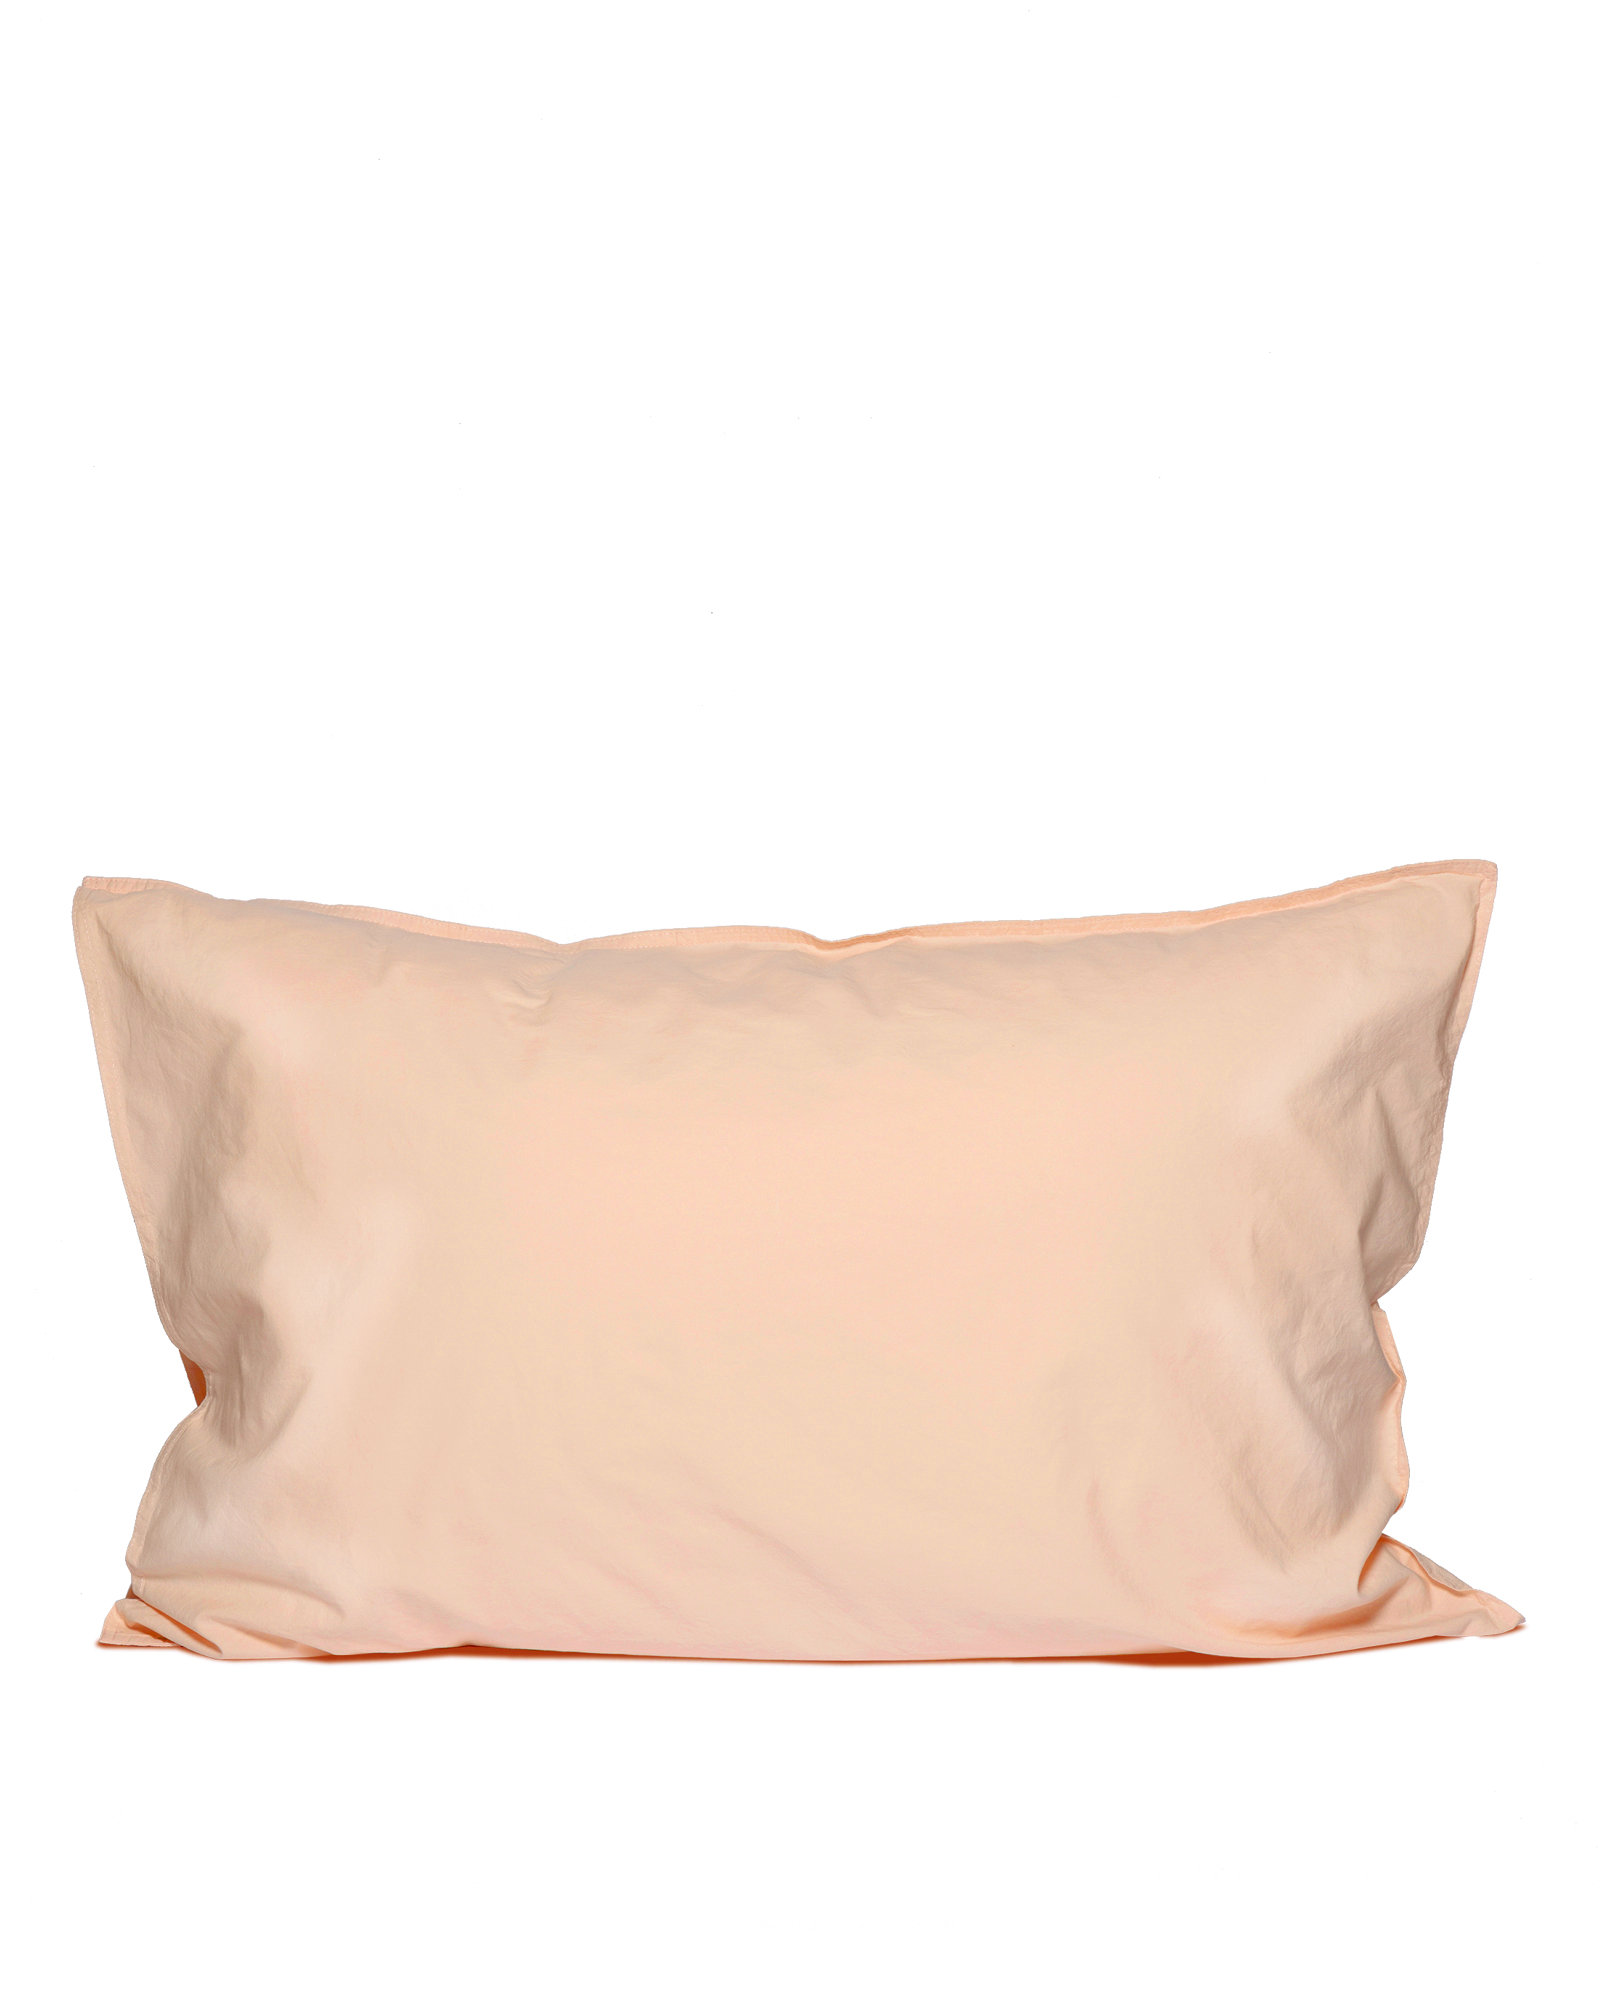 MARIE-MARIE - Pillowcase SLEEPY SATEEN Peach - 50x75 cm - Peach